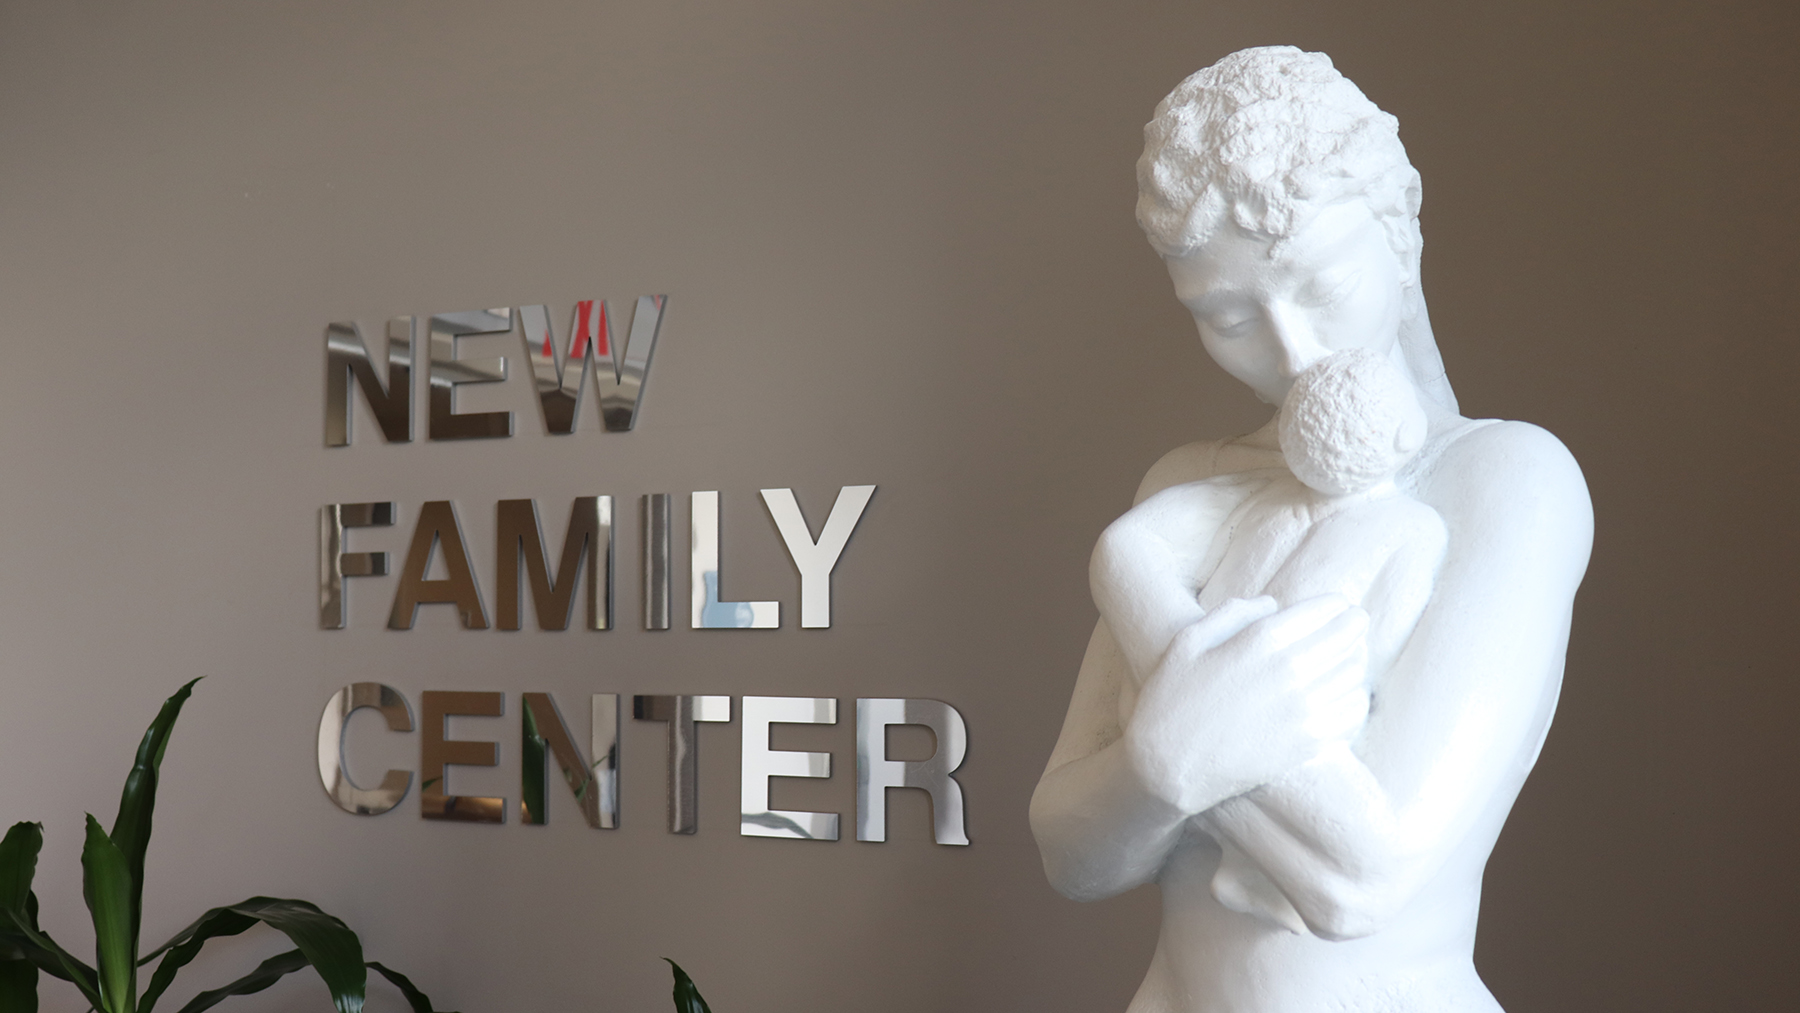 New Family Center (Maternity)